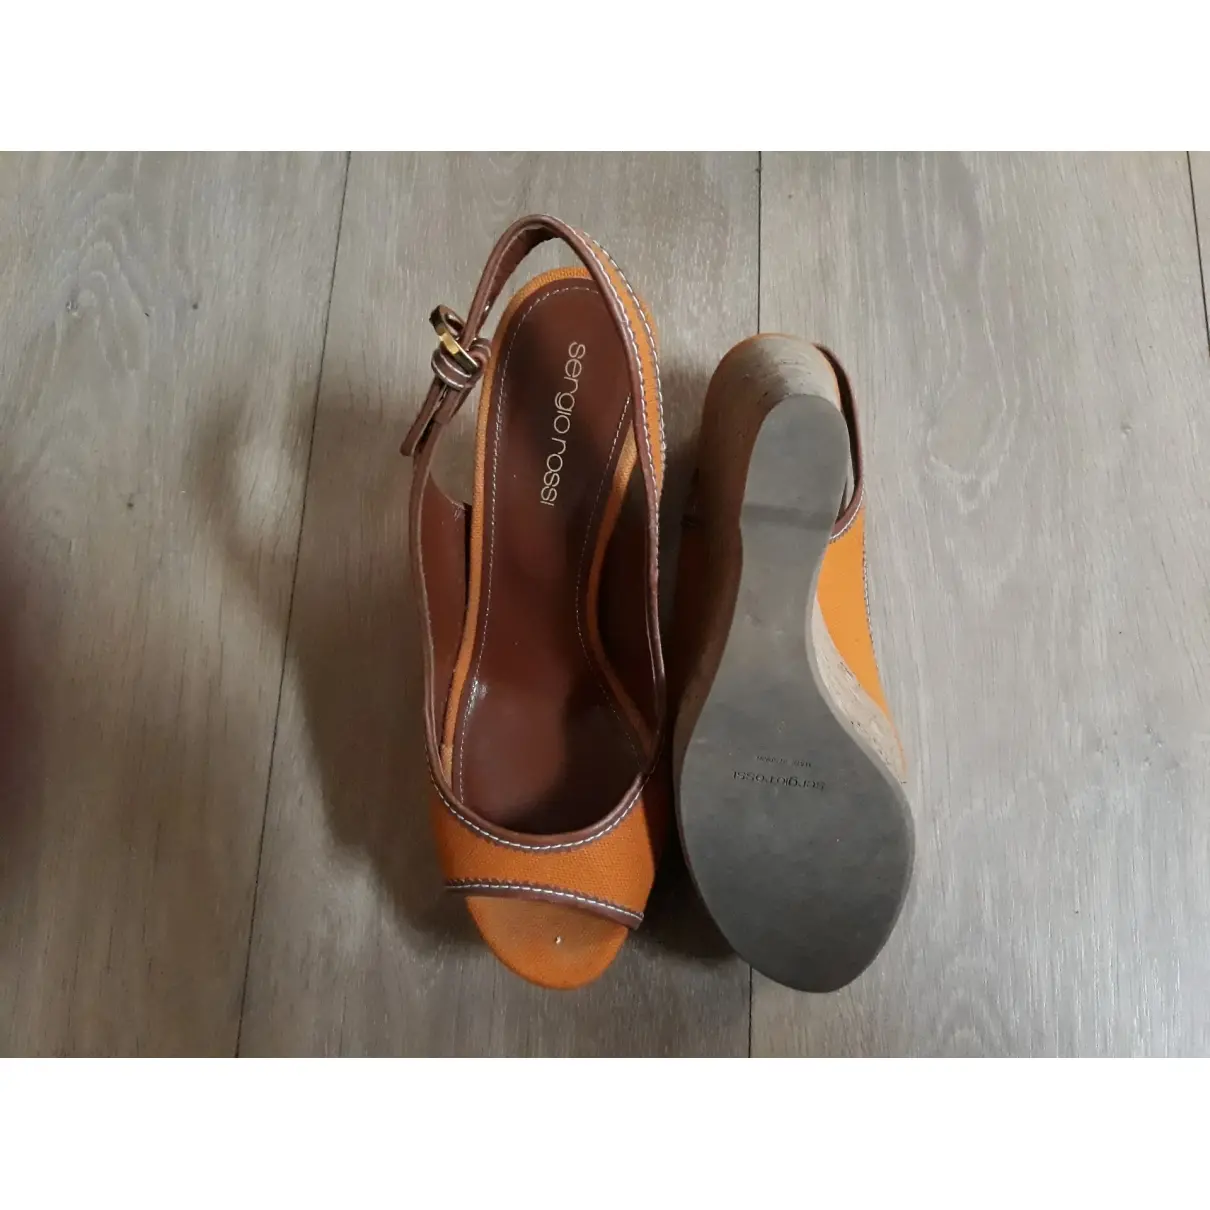 Buy Sergio Rossi Cloth sandals online